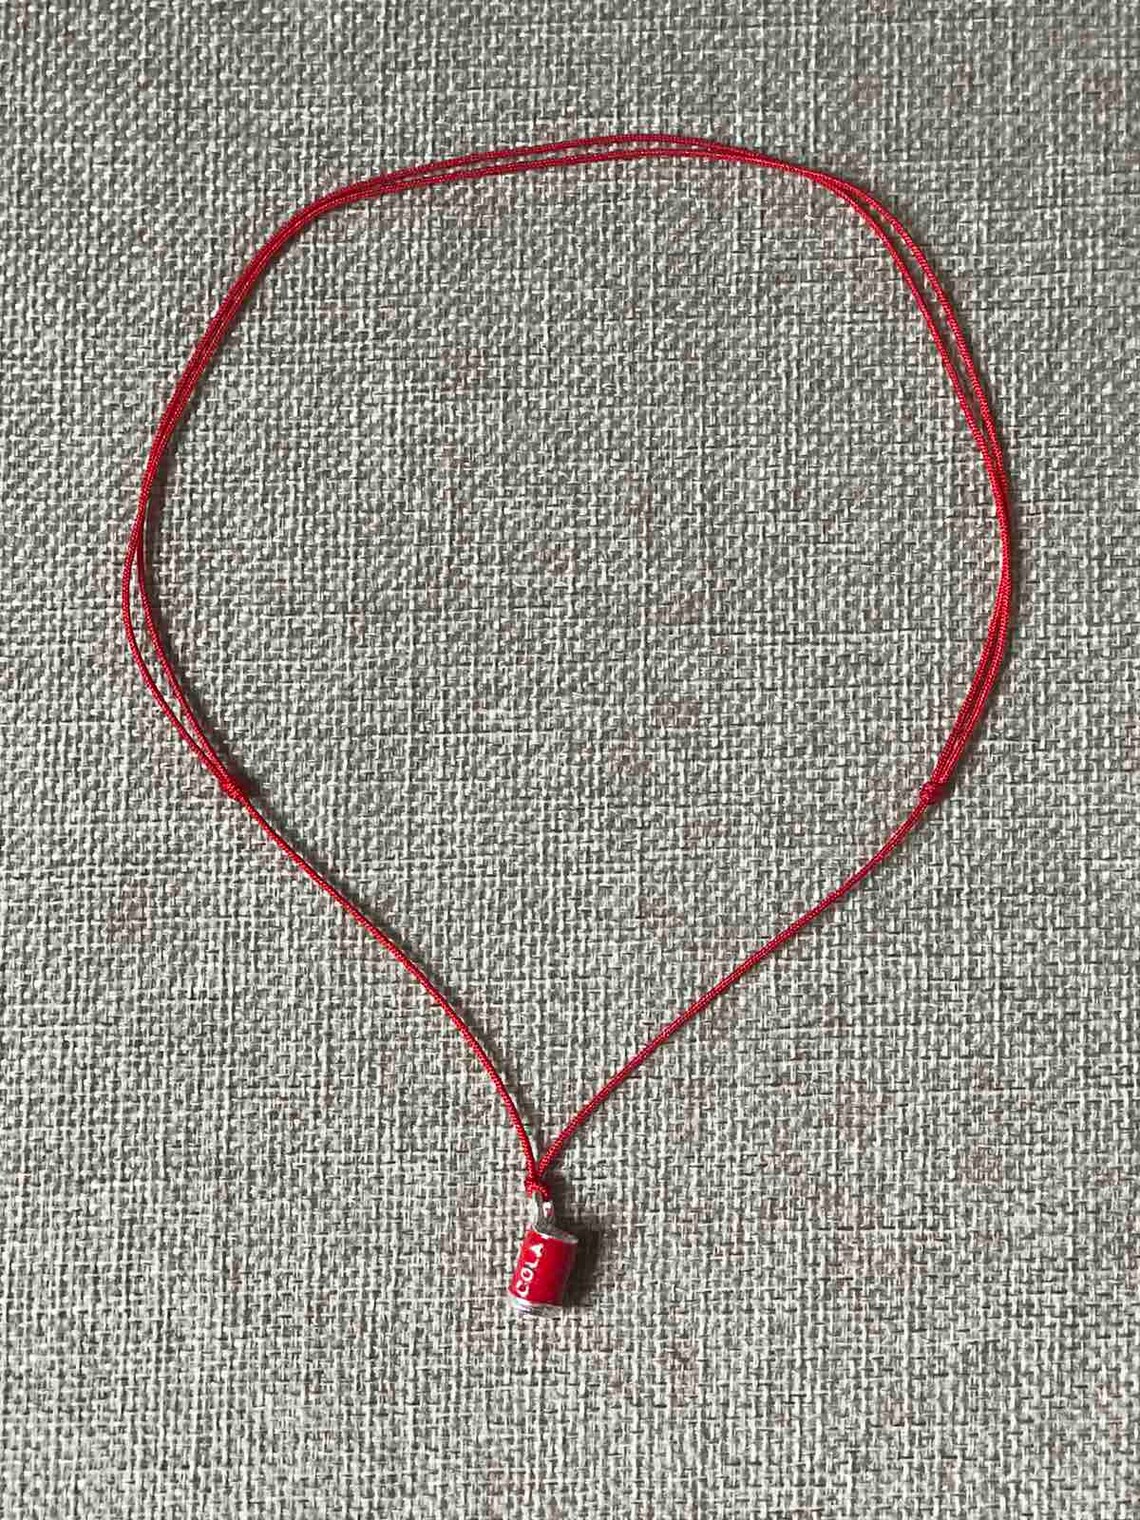 Cola Slip-knot charm necklace Sliding knots necklaces | Etsy